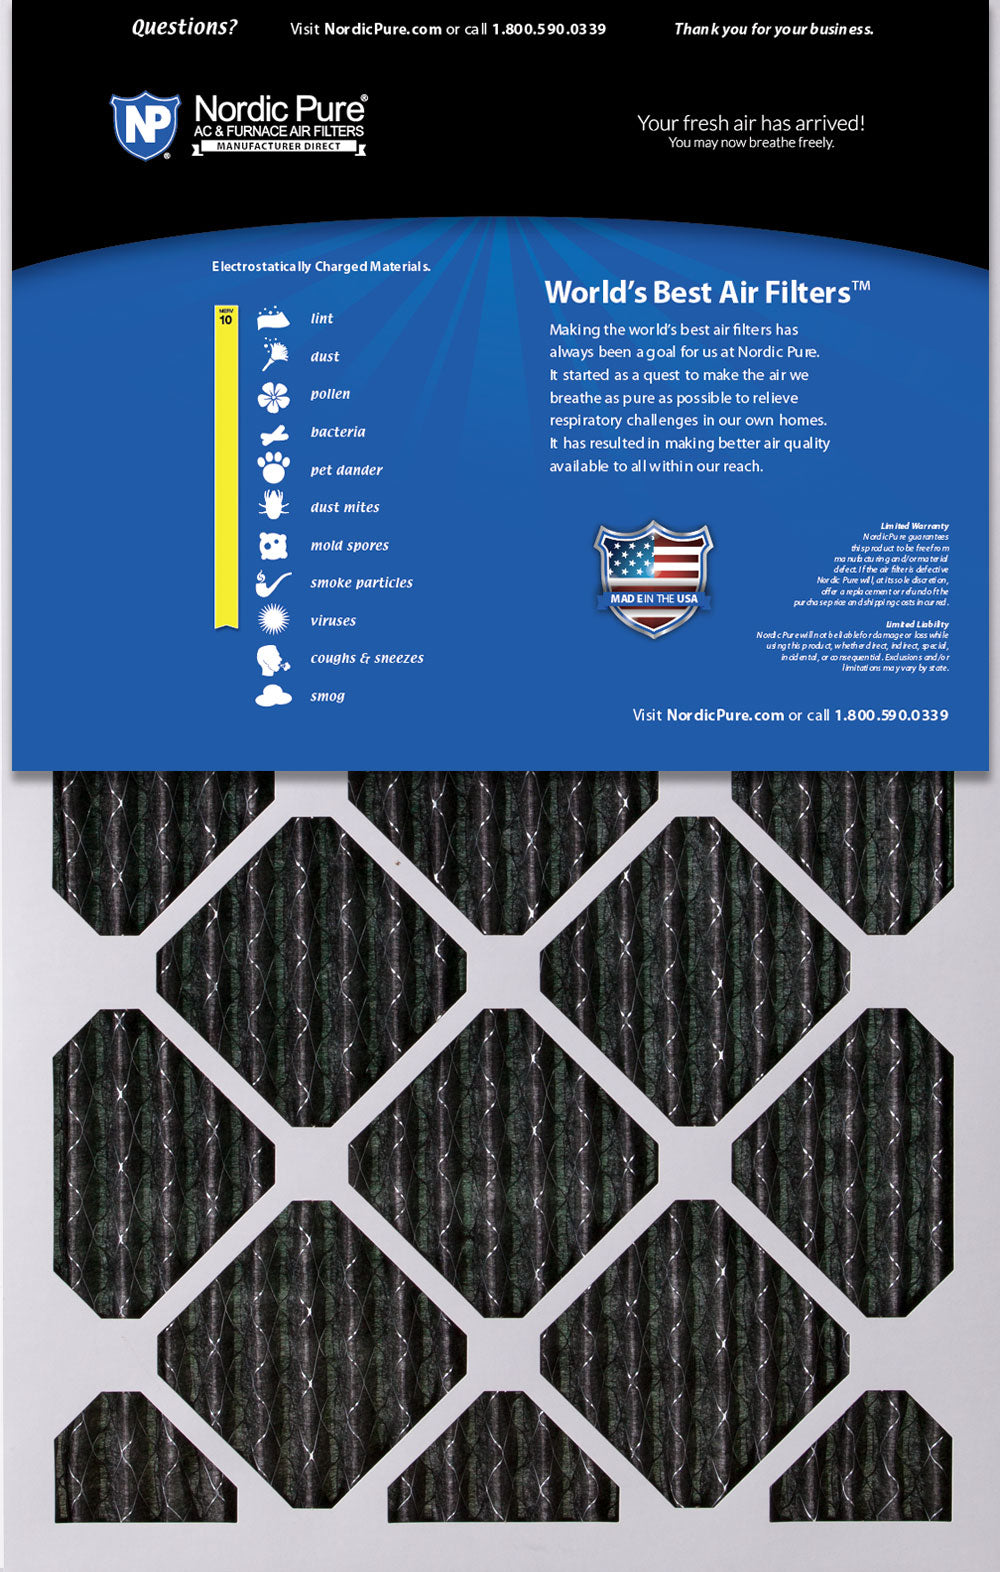 25x32x1 Exact MERV 10 Plus Carbon AC Furnace Filters